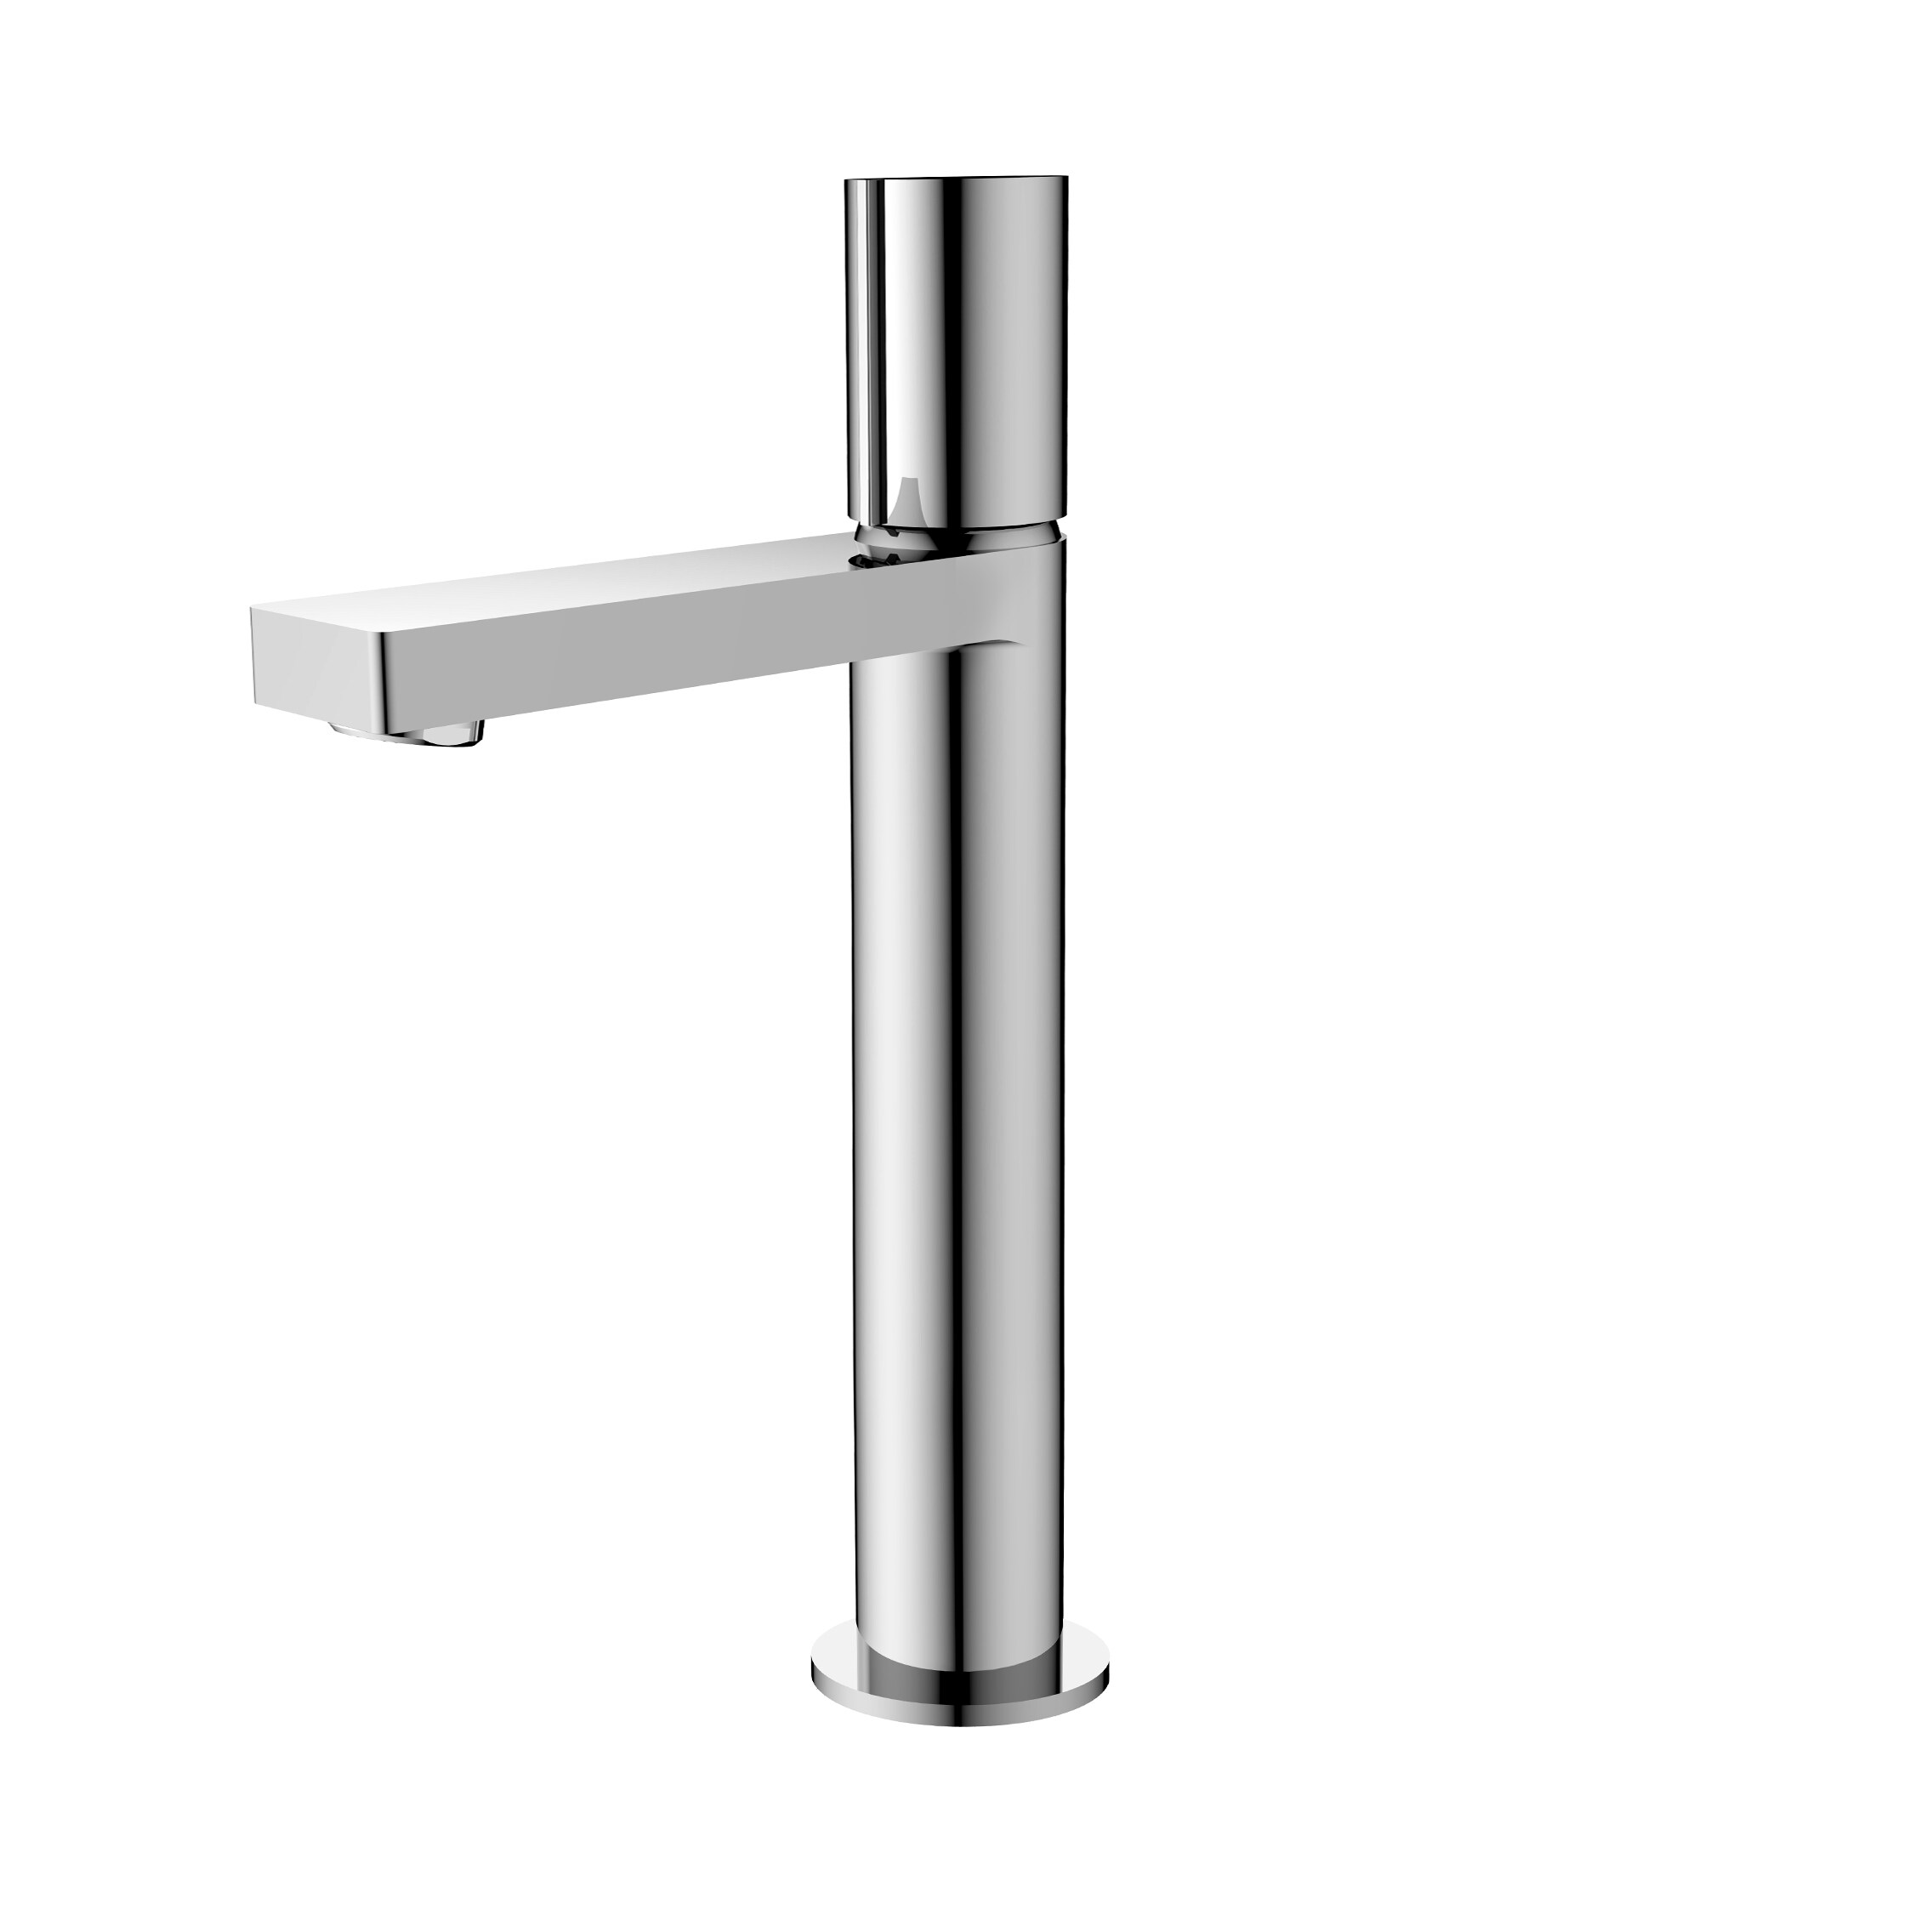 Chrome Bathroom Vanity Basin Sink Mixer Faucet Toliet Single Handle Hole Taps 